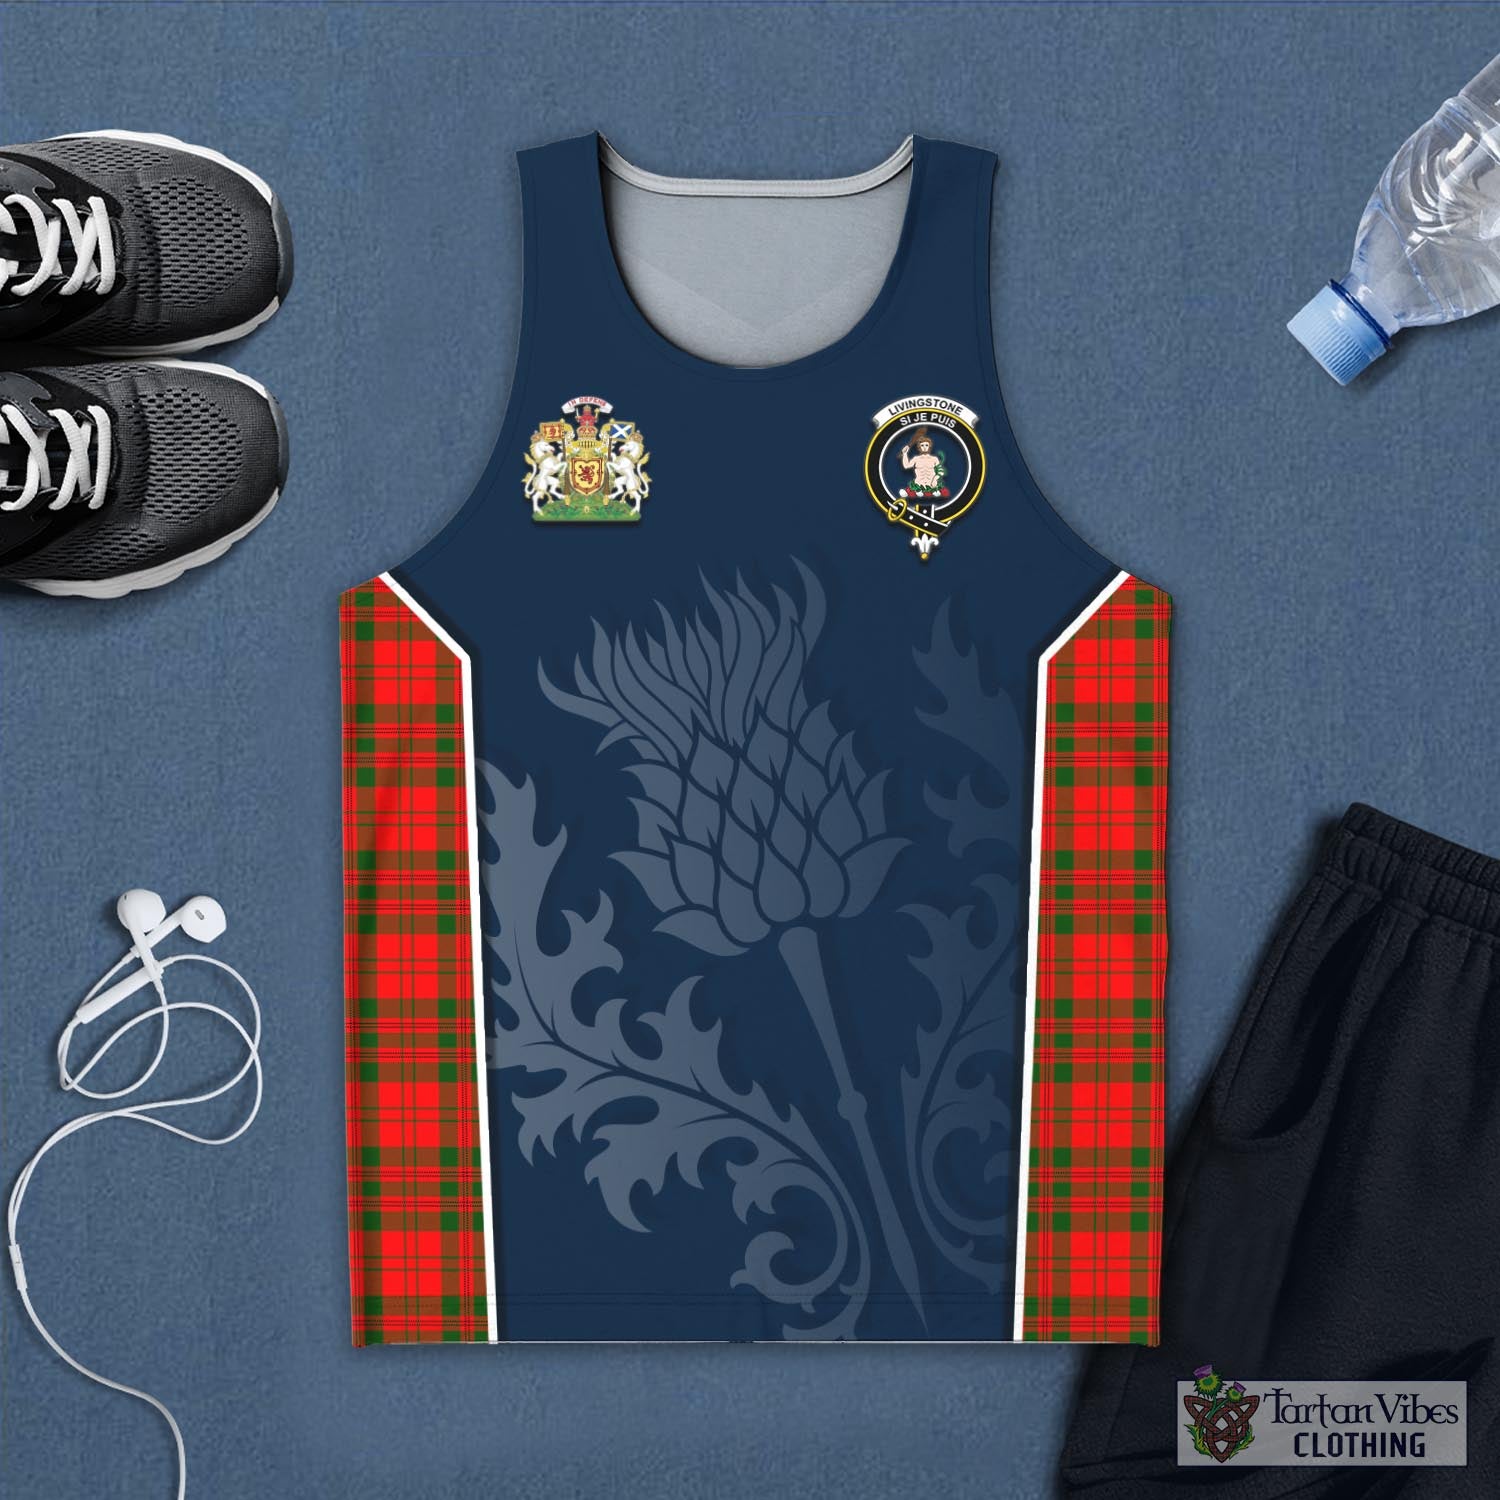 Tartan Vibes Clothing Livingston Modern Tartan Men's Tanks Top with Family Crest and Scottish Thistle Vibes Sport Style